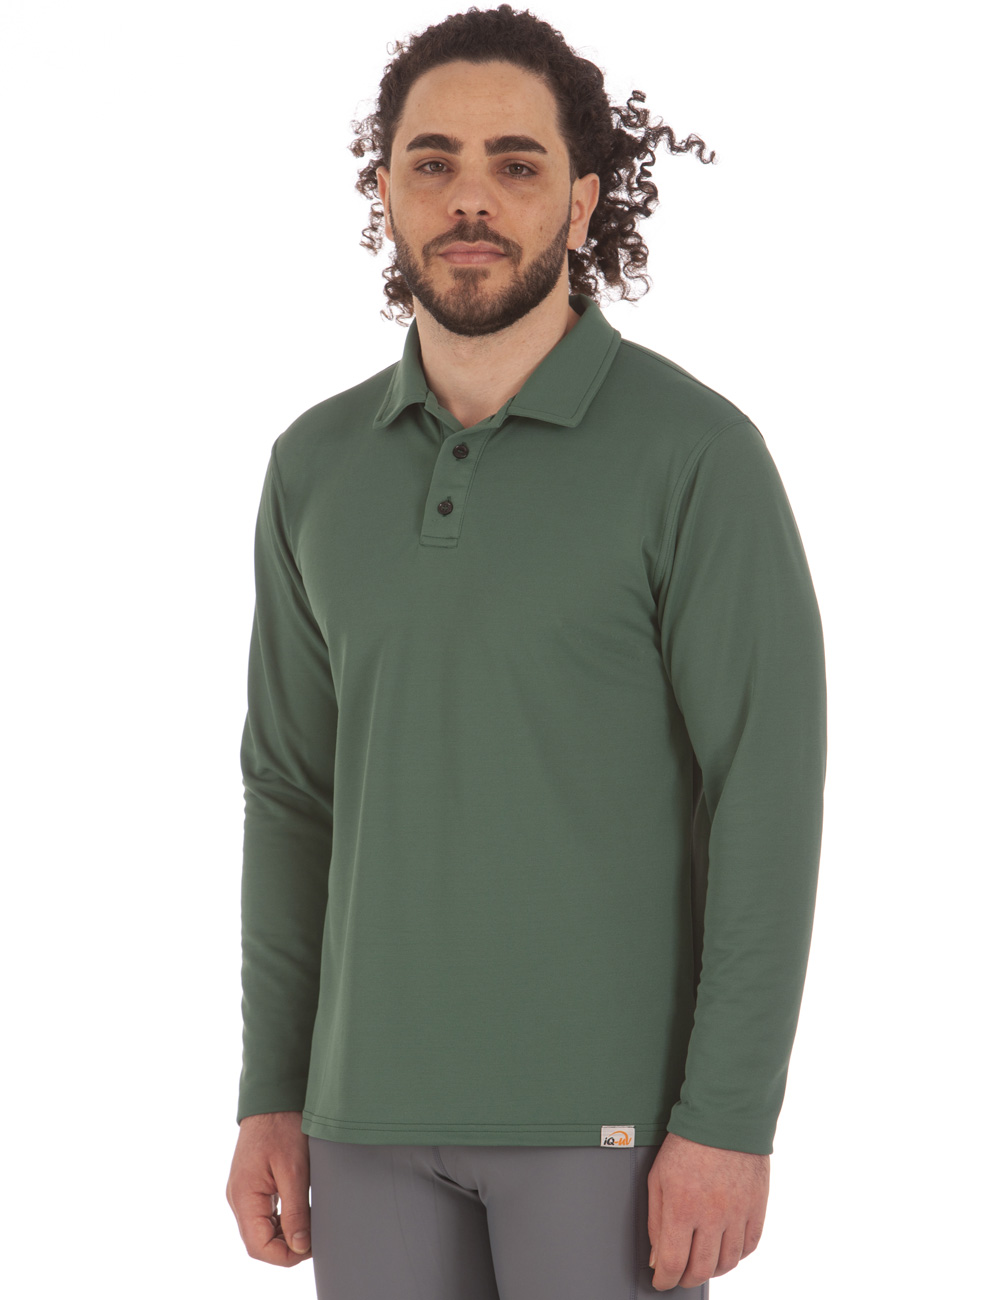 UV Schutz Polo Shirt langarm recycelt Herren grün angezogen